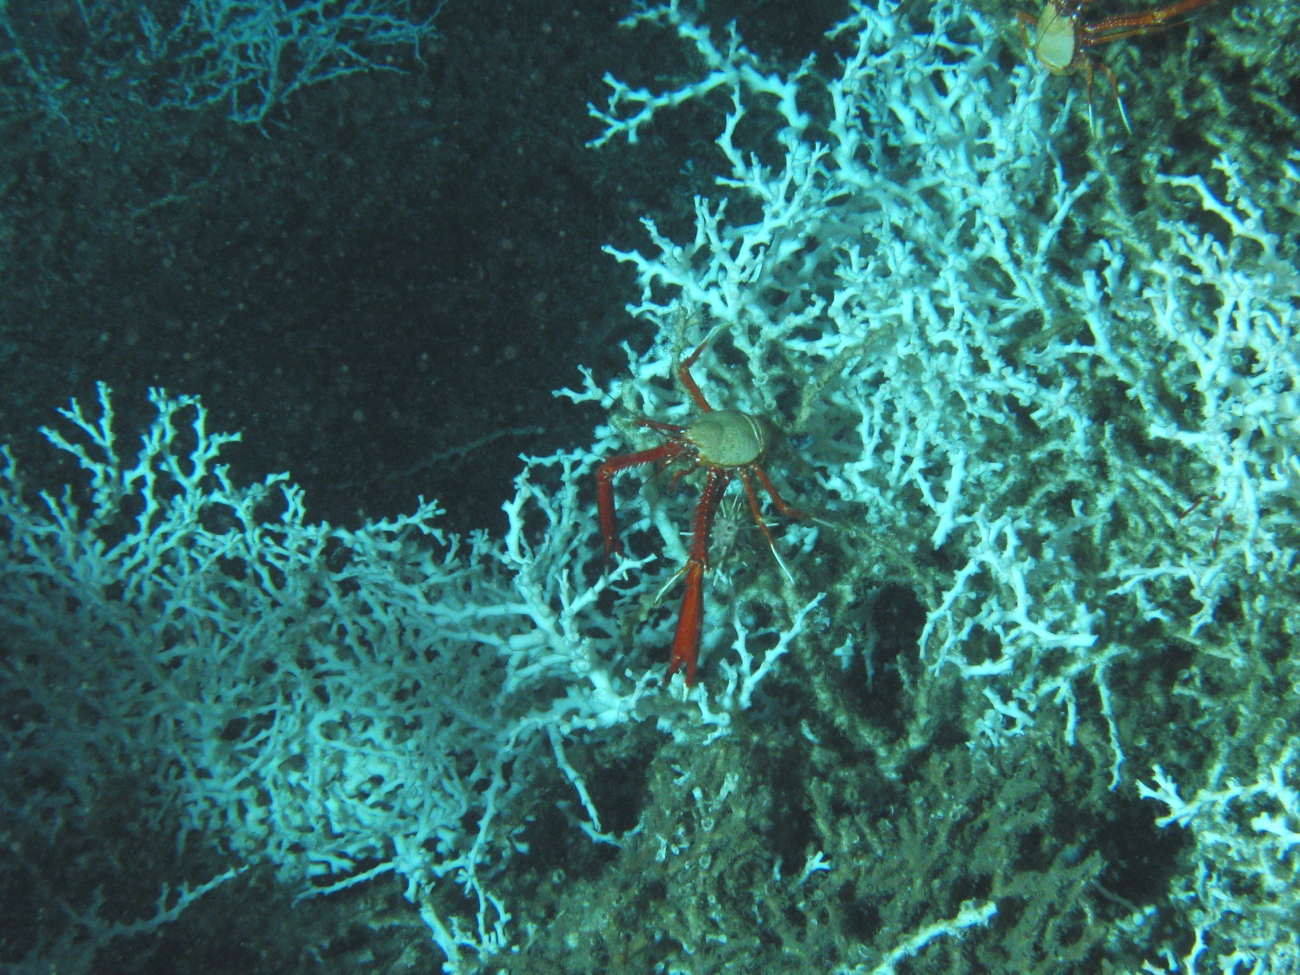 Galatheid crabs on a lophelia coral bush